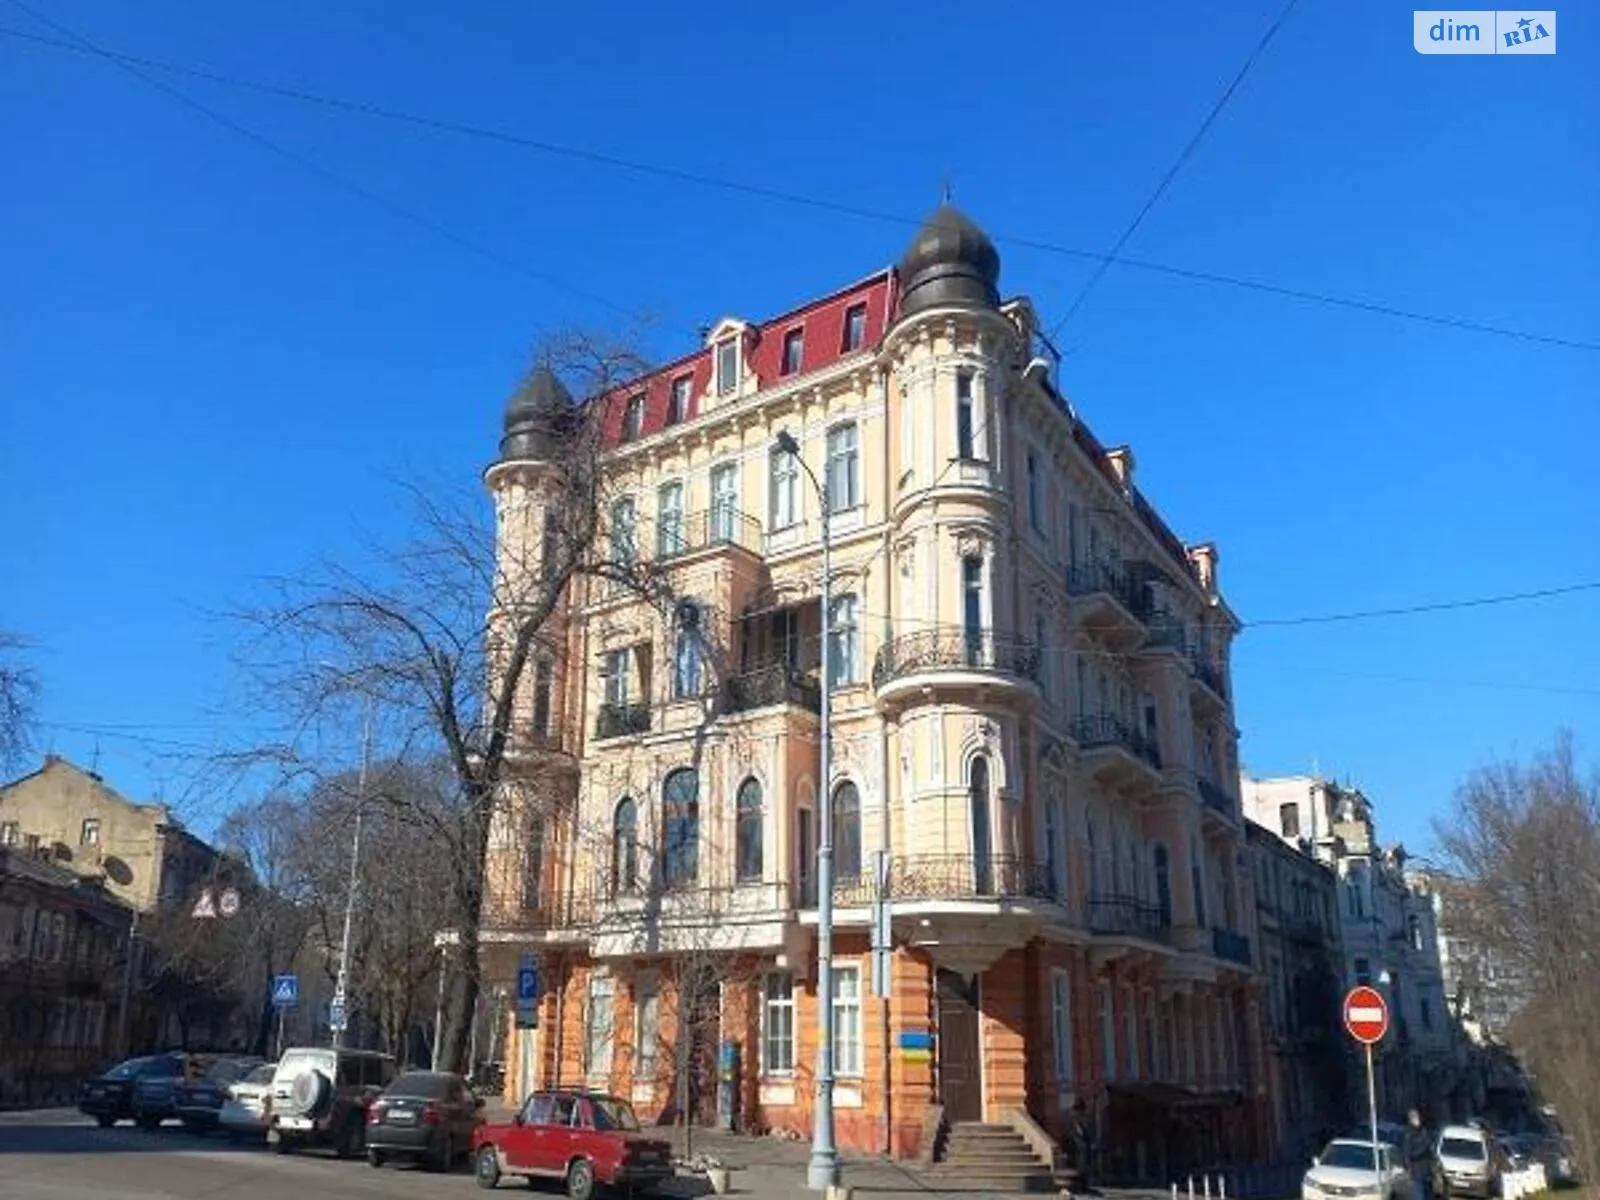 Продается комната 100 кв. м в Одессе, цена: 14500 $ - фото 1